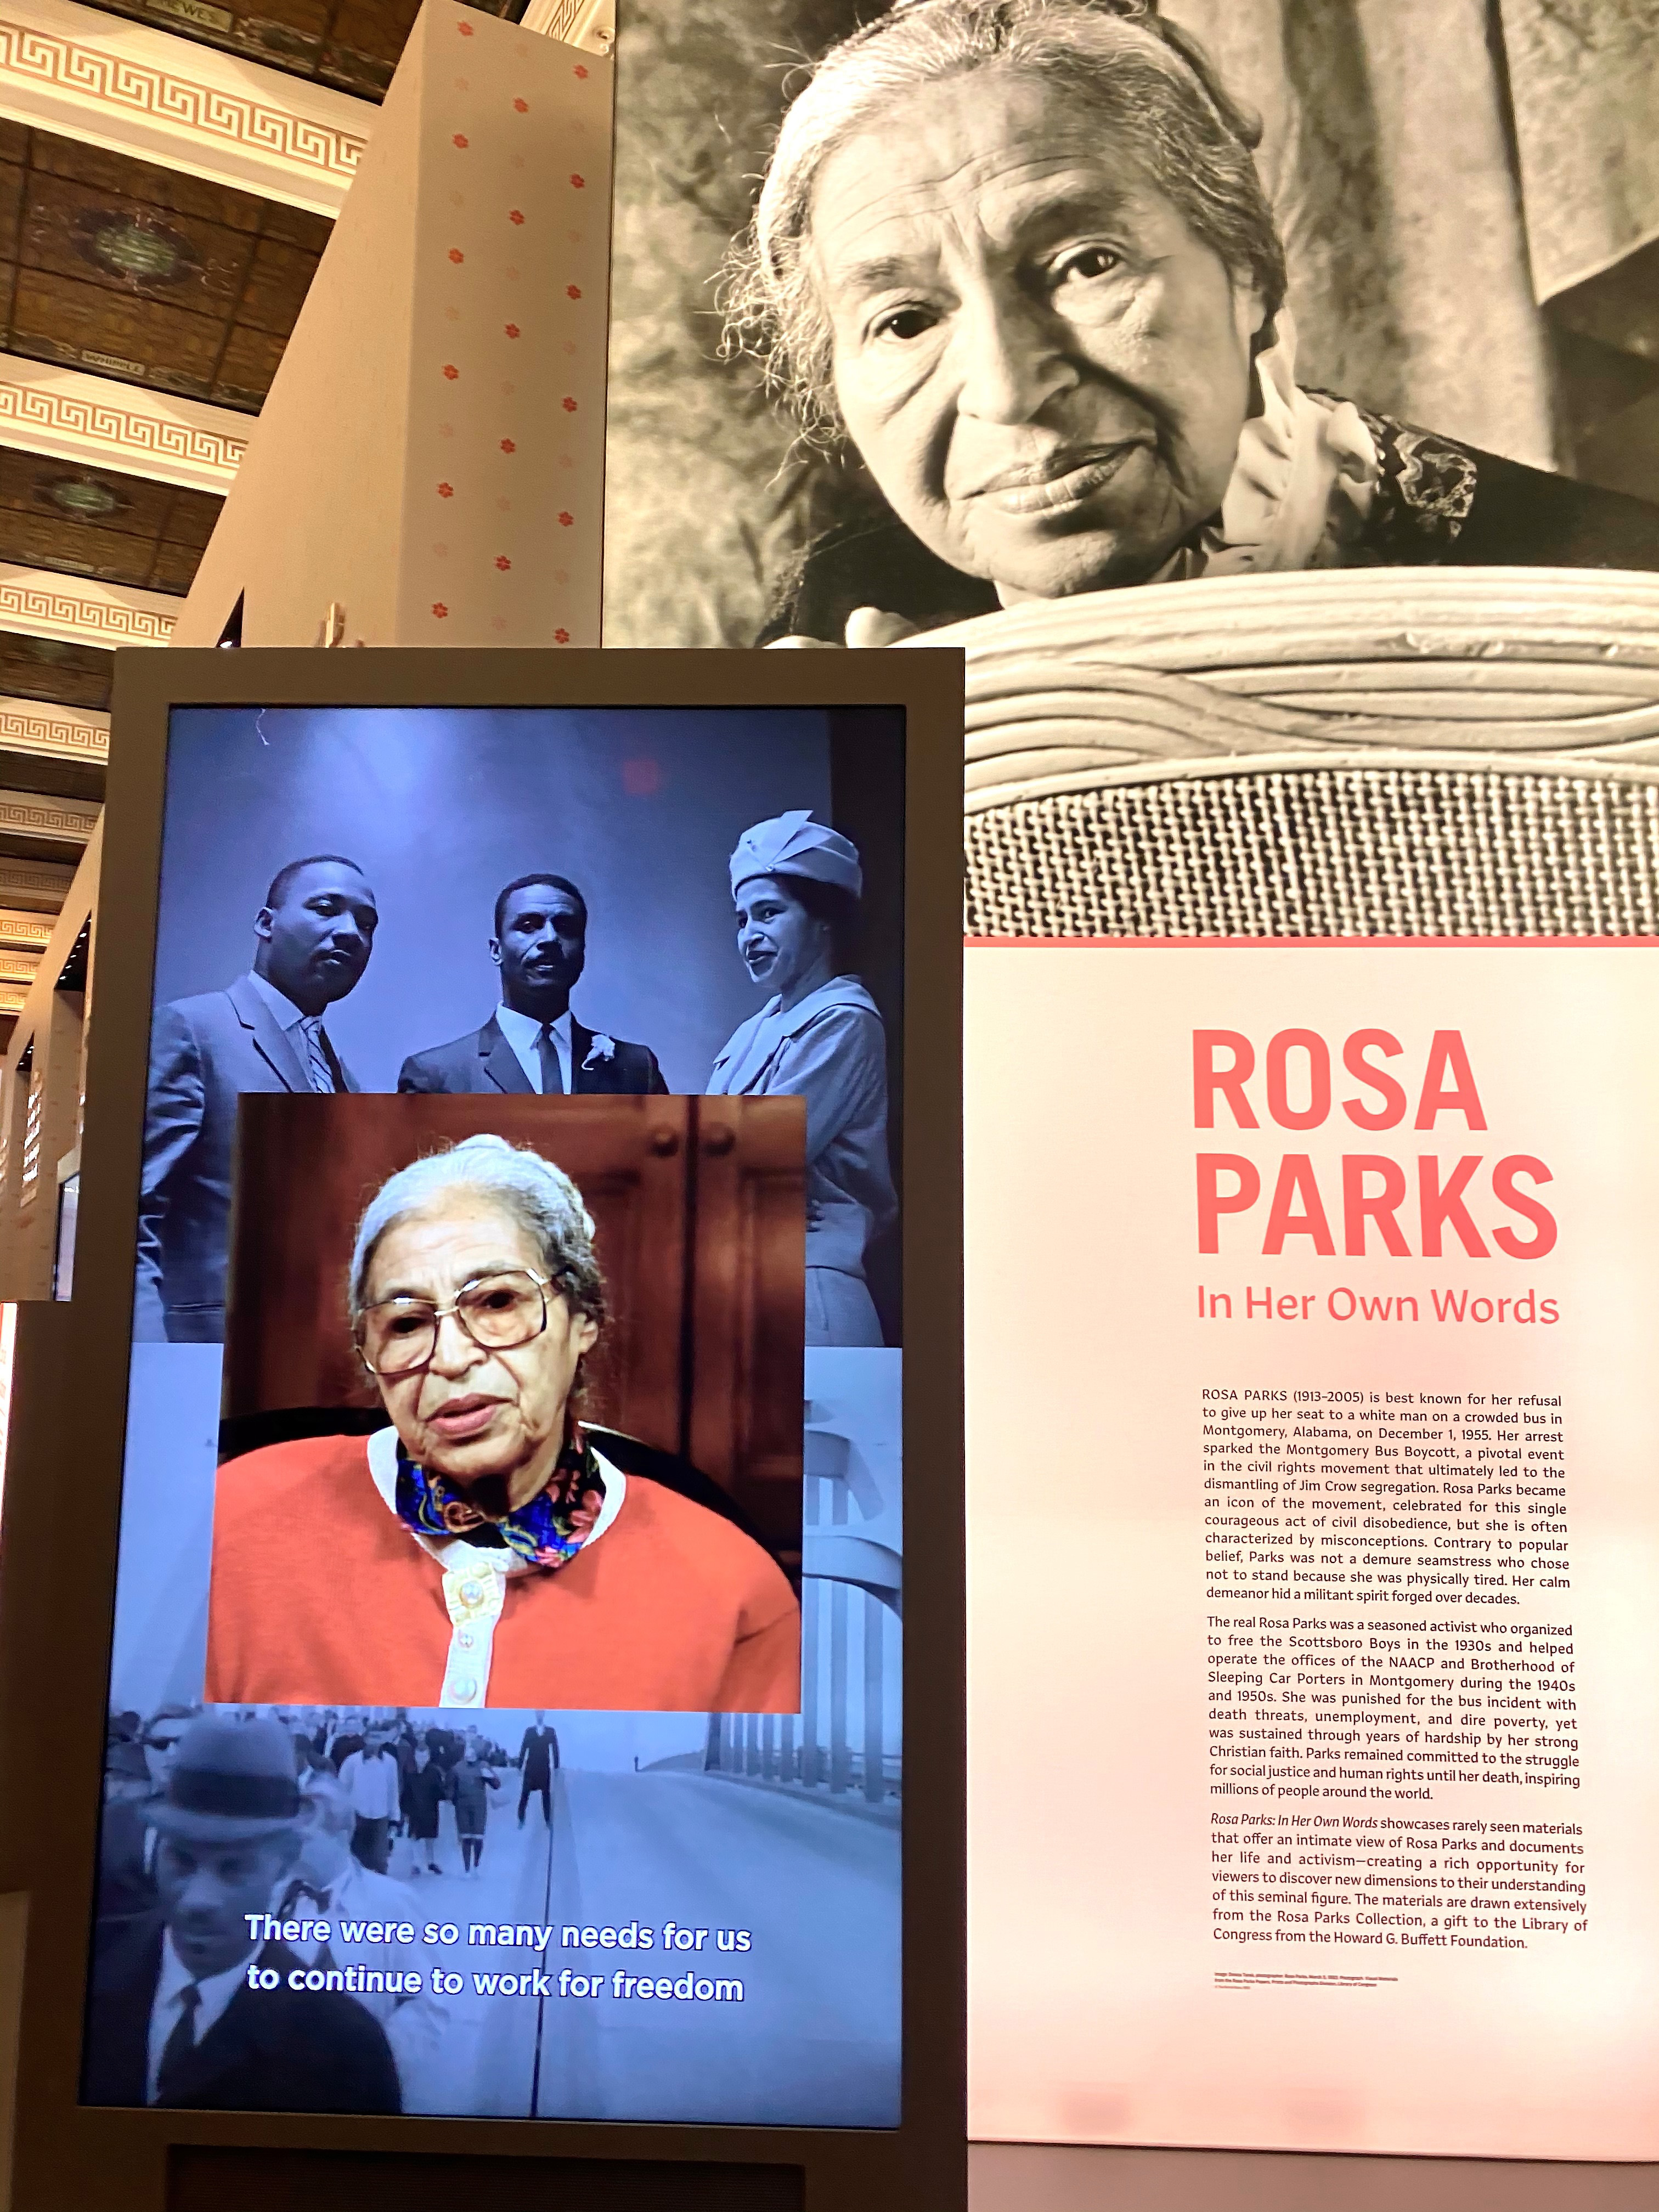 rosa parks biography